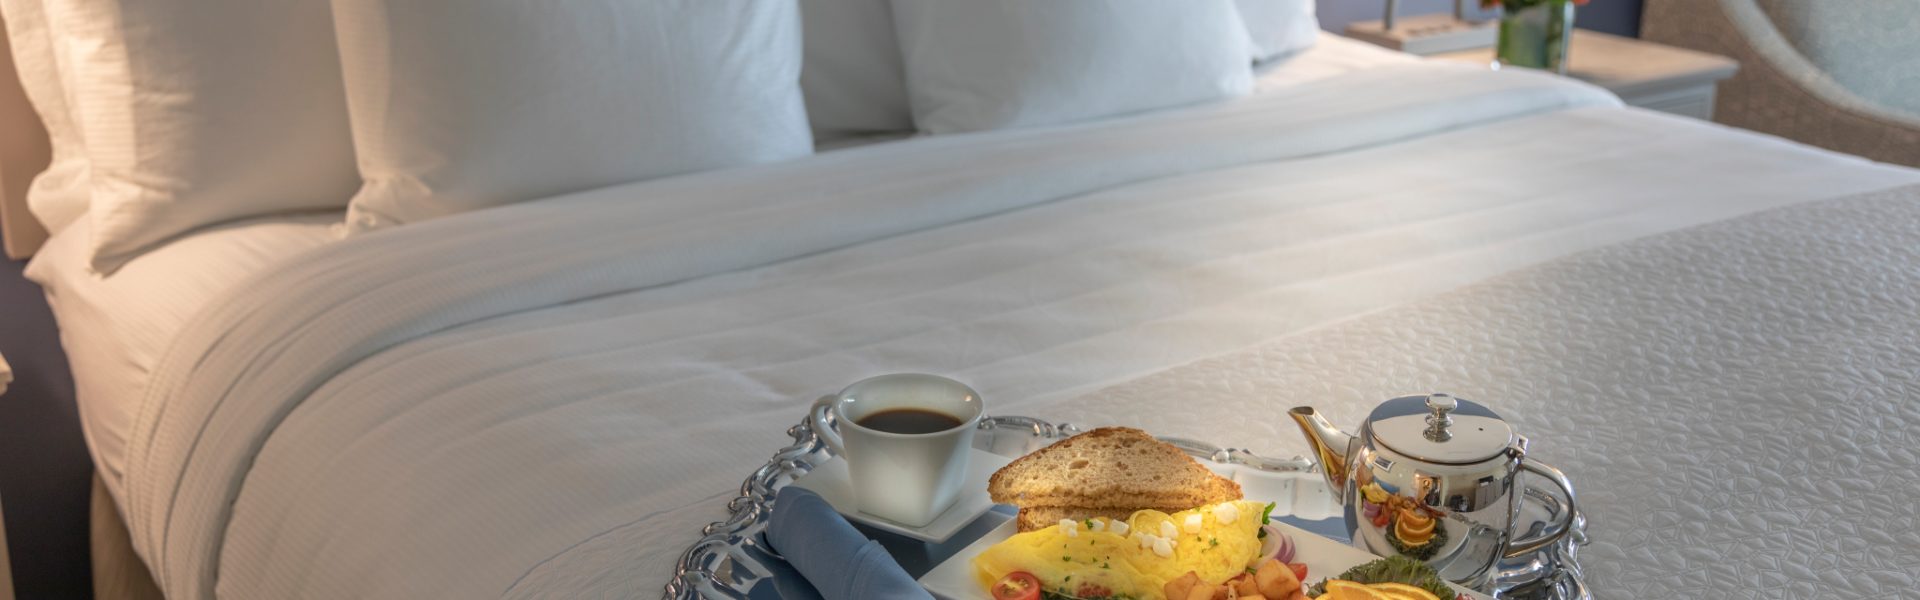 Chautauqua hotel breakfast in bed